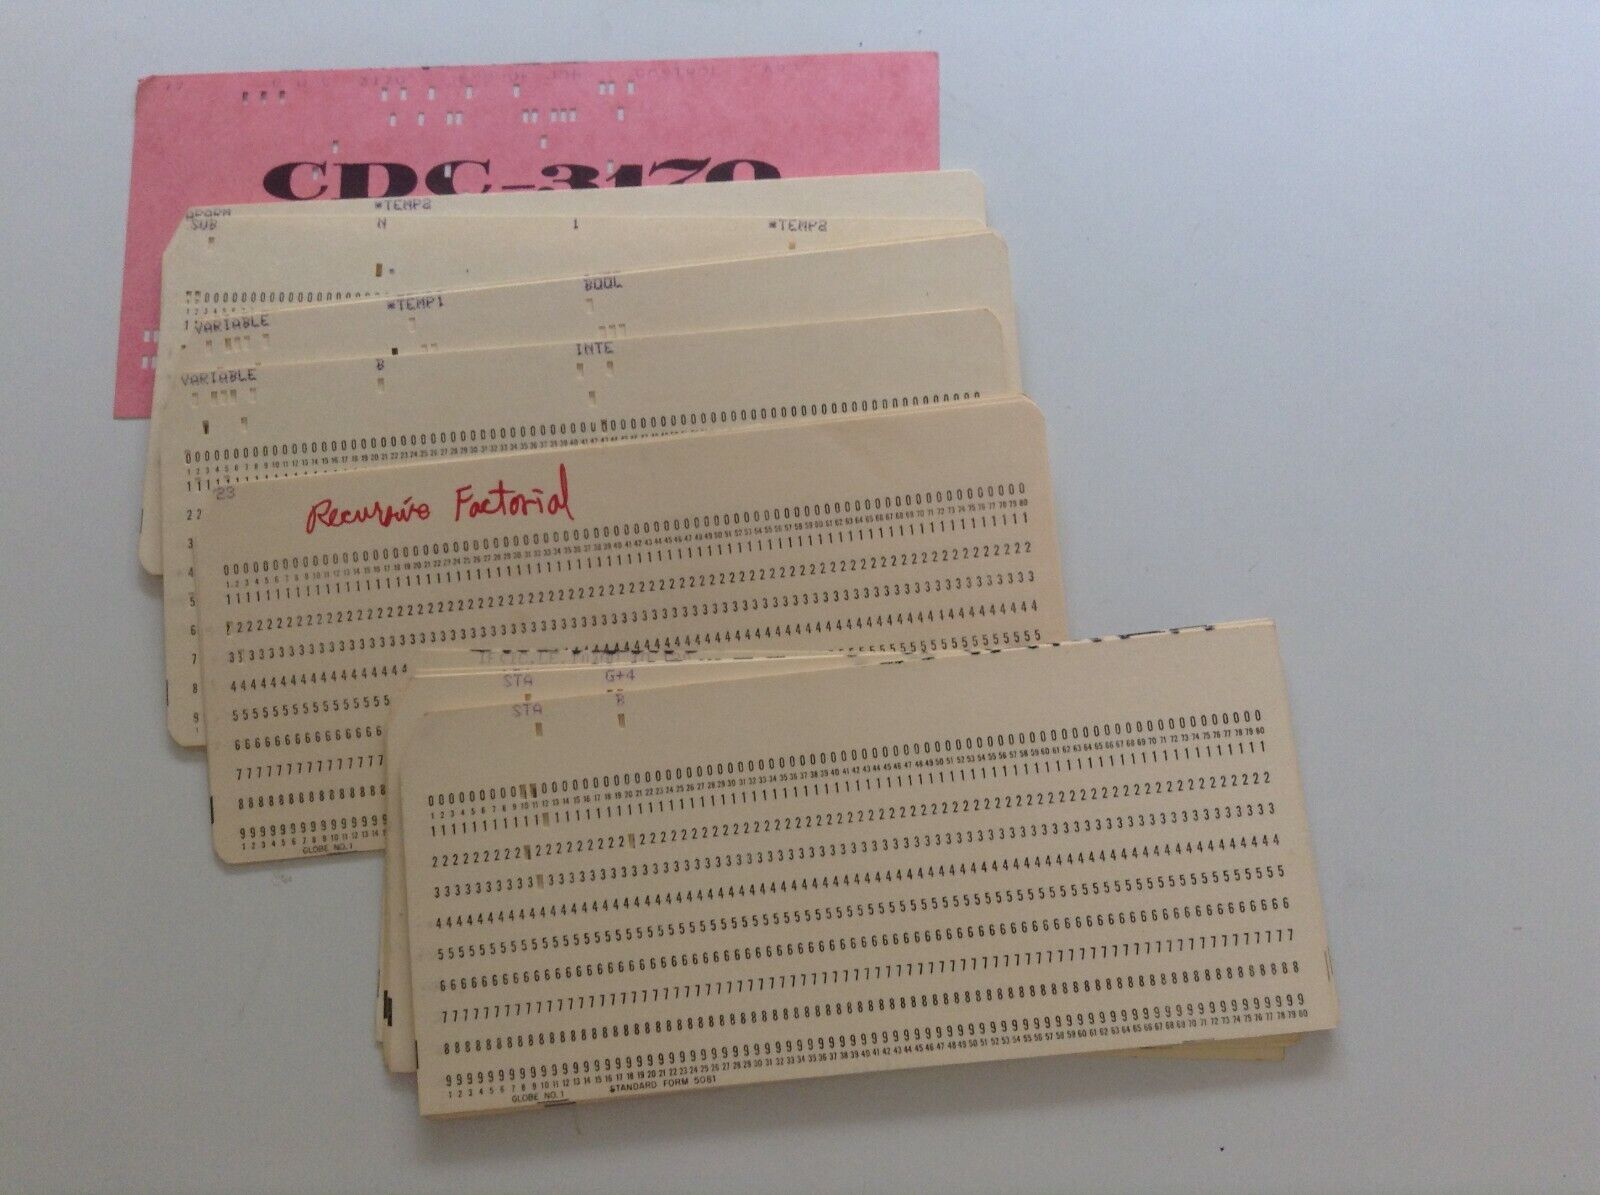 40 Vintage Computer Punch Cards Assembly Assembler code CDC End Job Control PINK